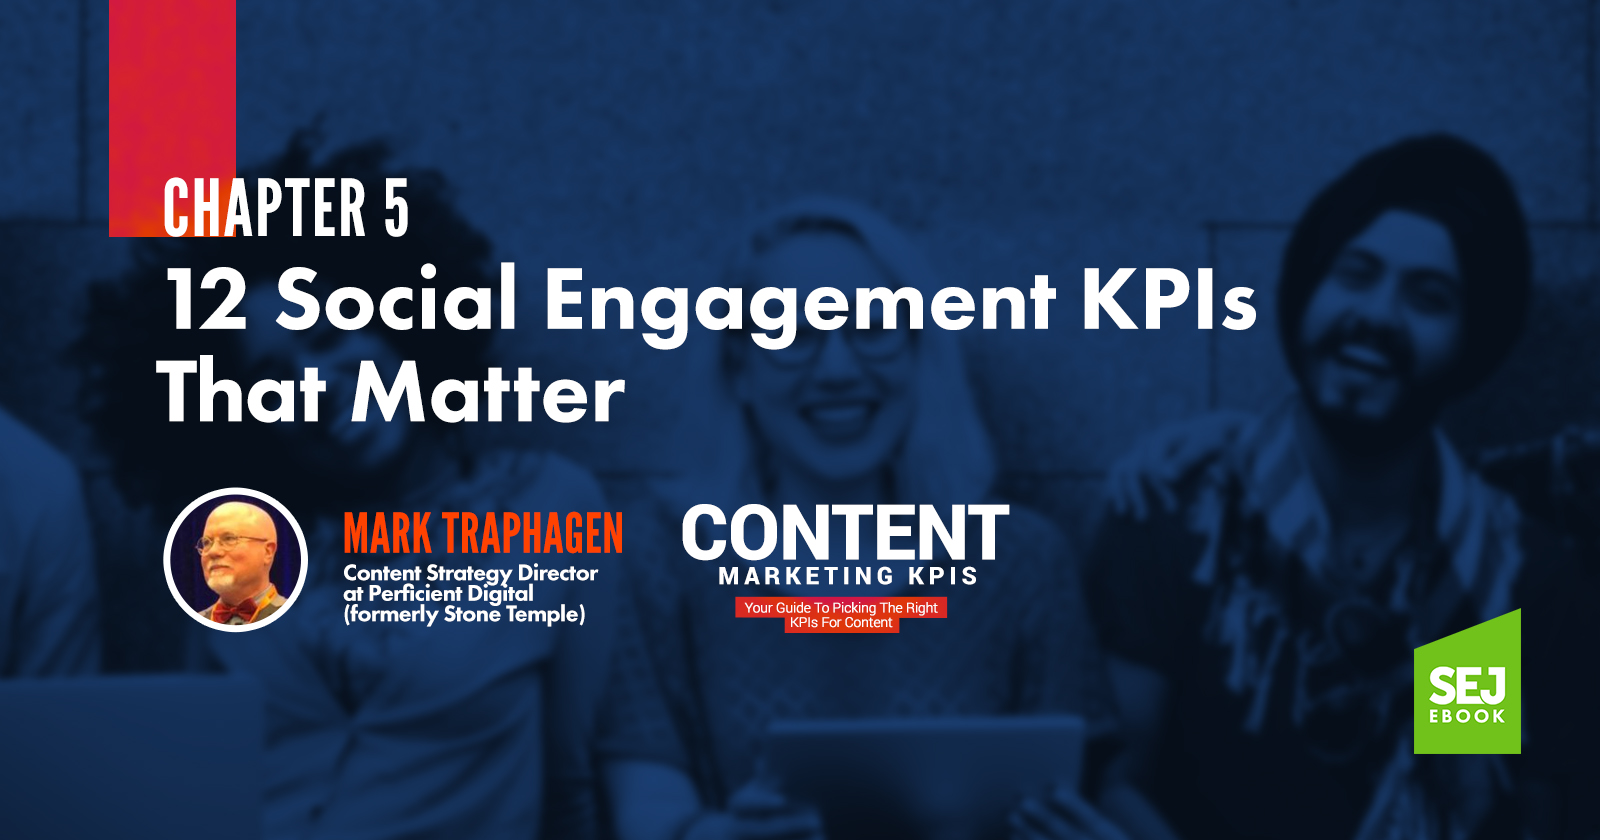 Chapter 5 - 12 Social Engagement KPIs That Matter